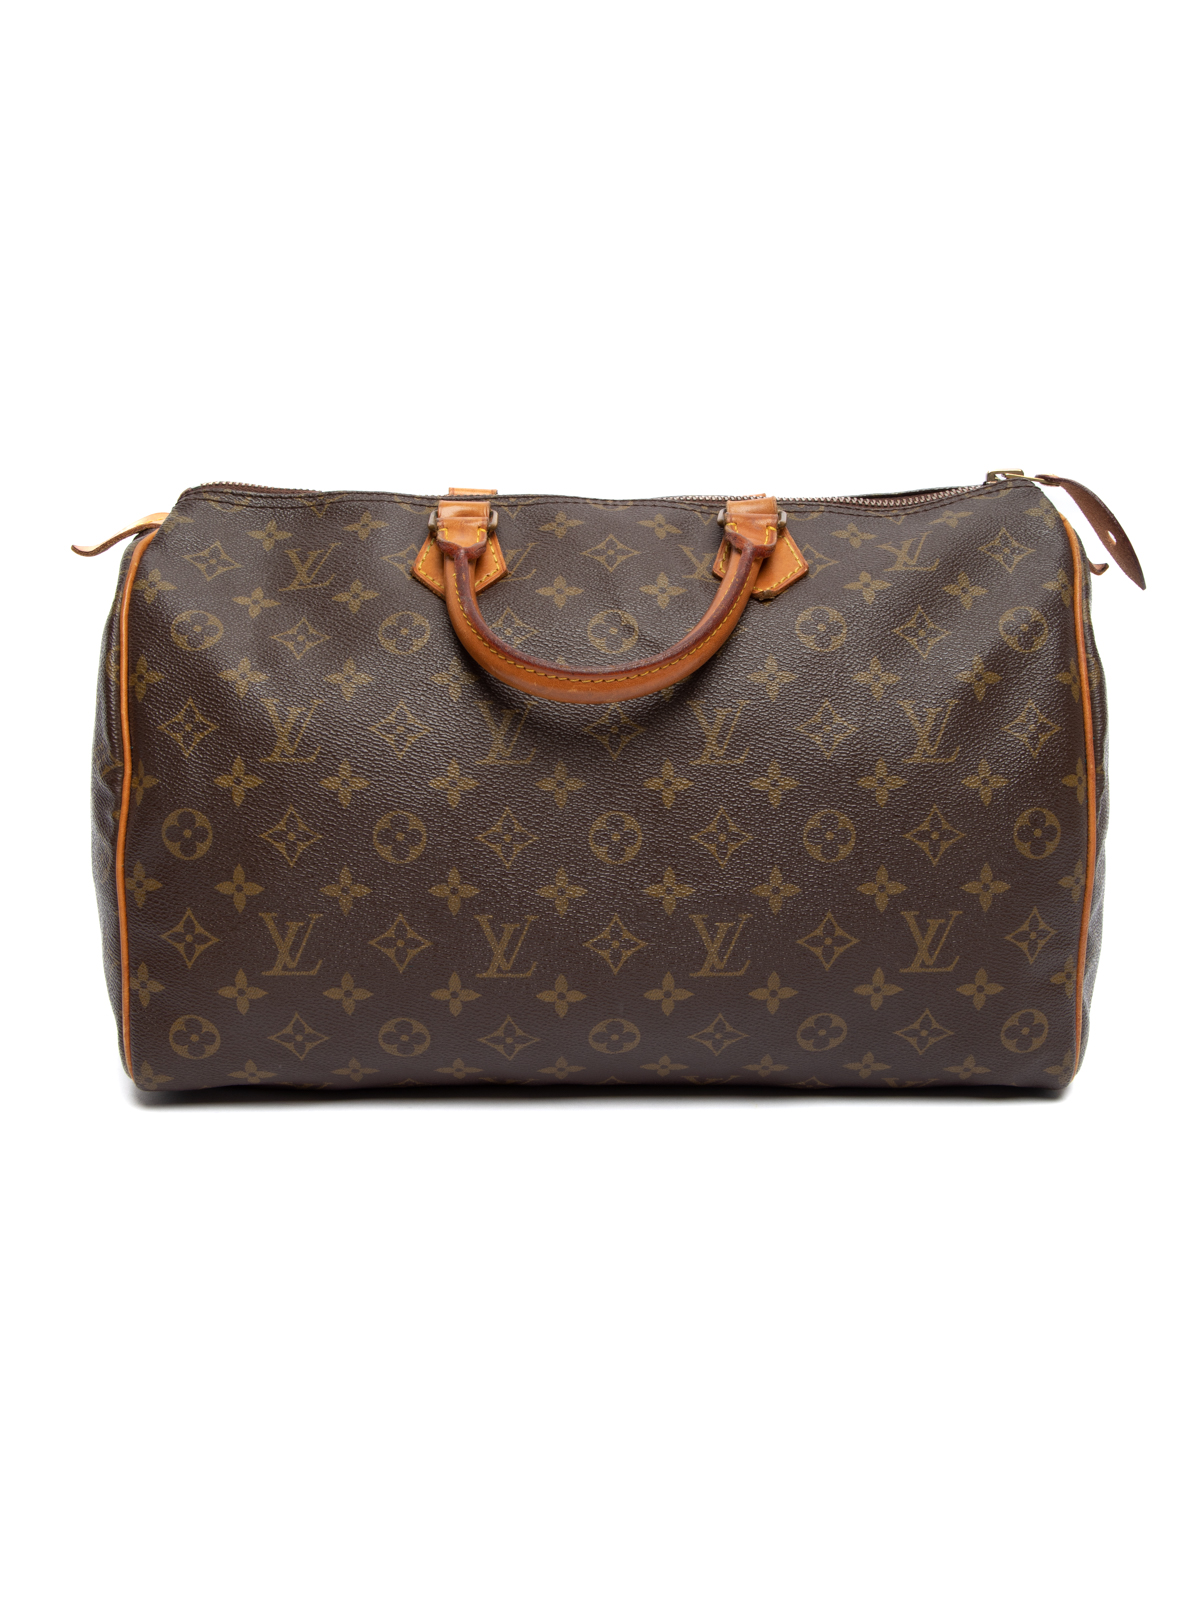 Louis Vuitton Speedy 35, Brown Leather